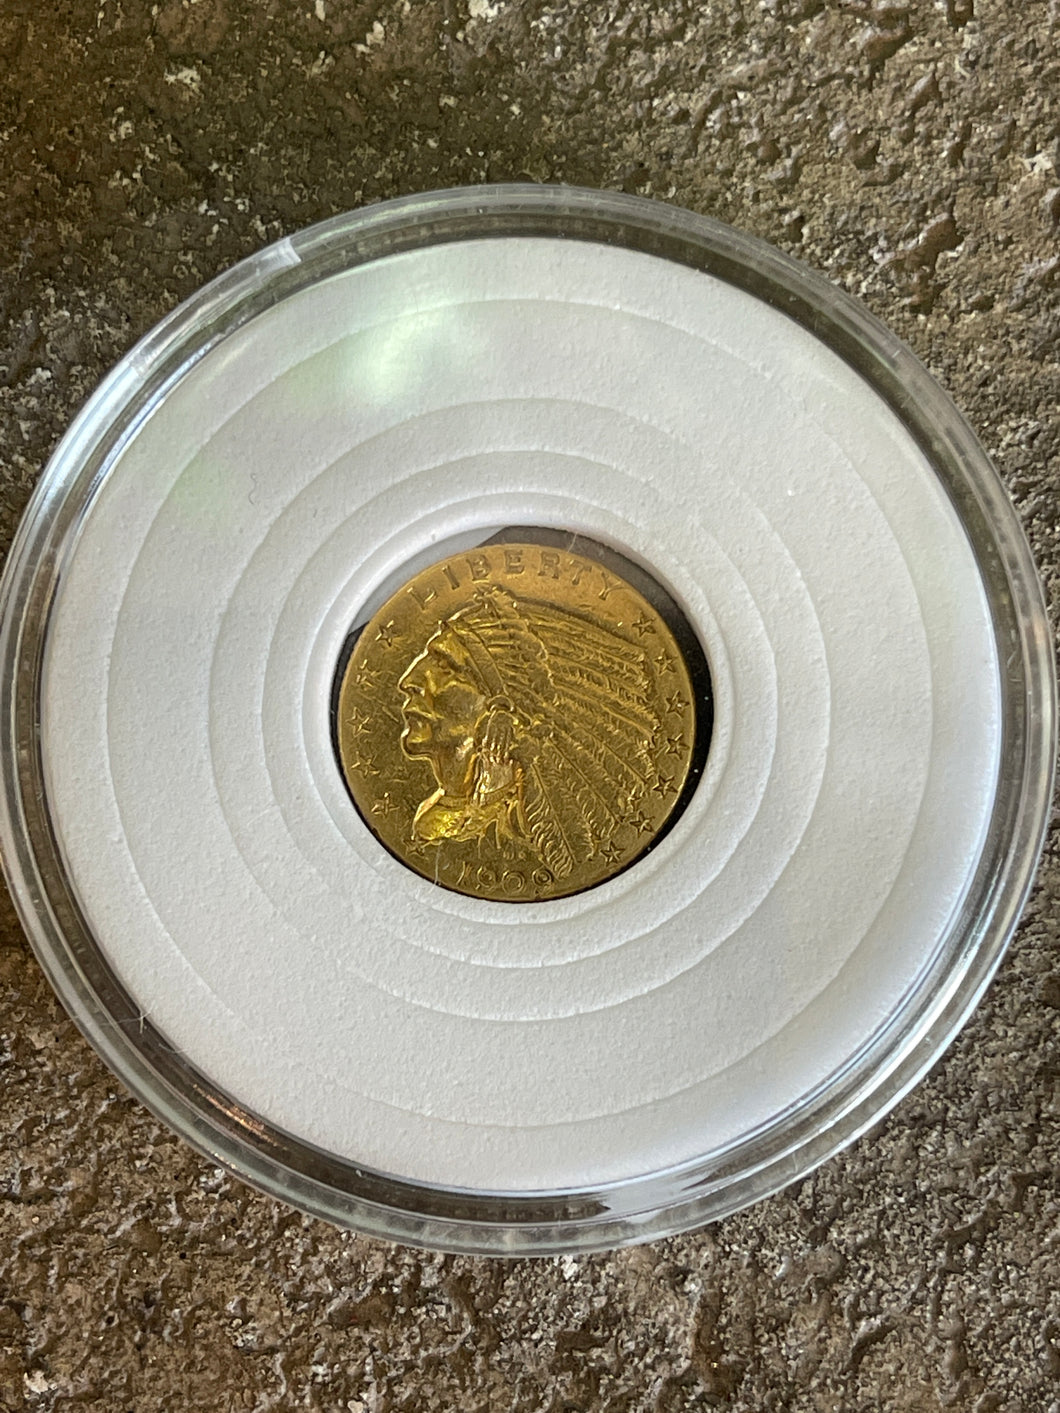 $2.50 Gold Indian Quarter Eagle Coin